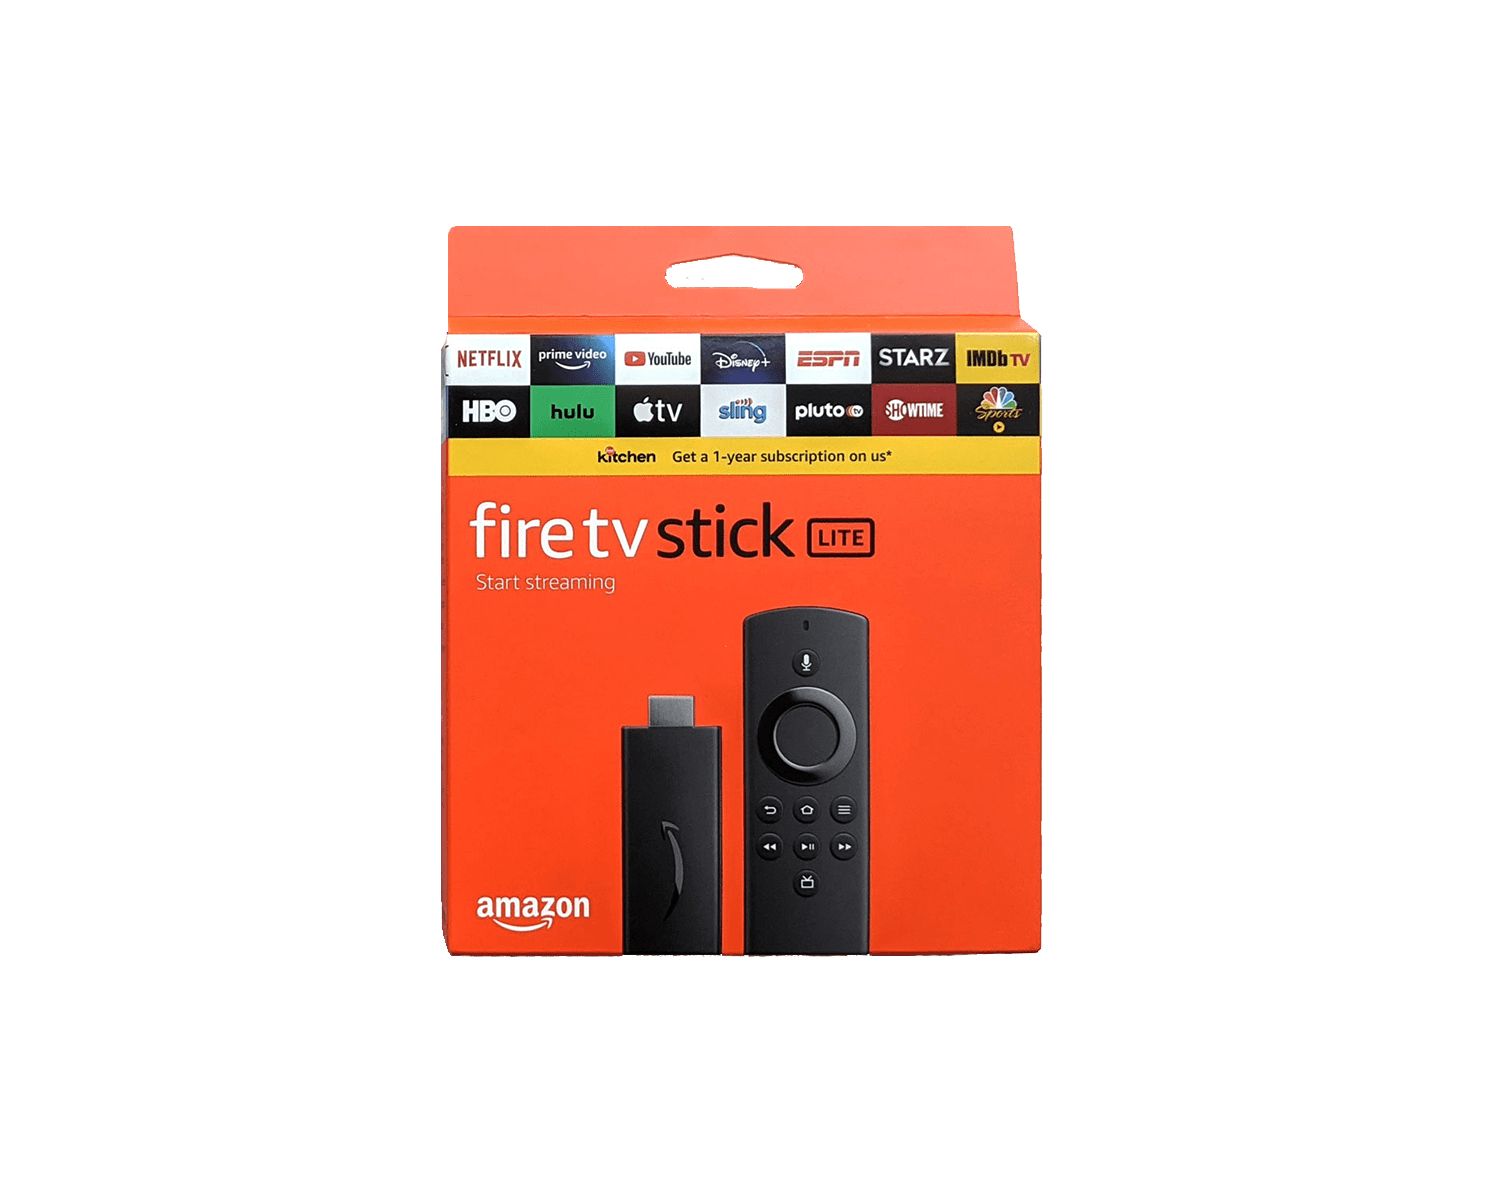 New  Firestick Fire TV Stick Lite Alexa Voice Remote Lite